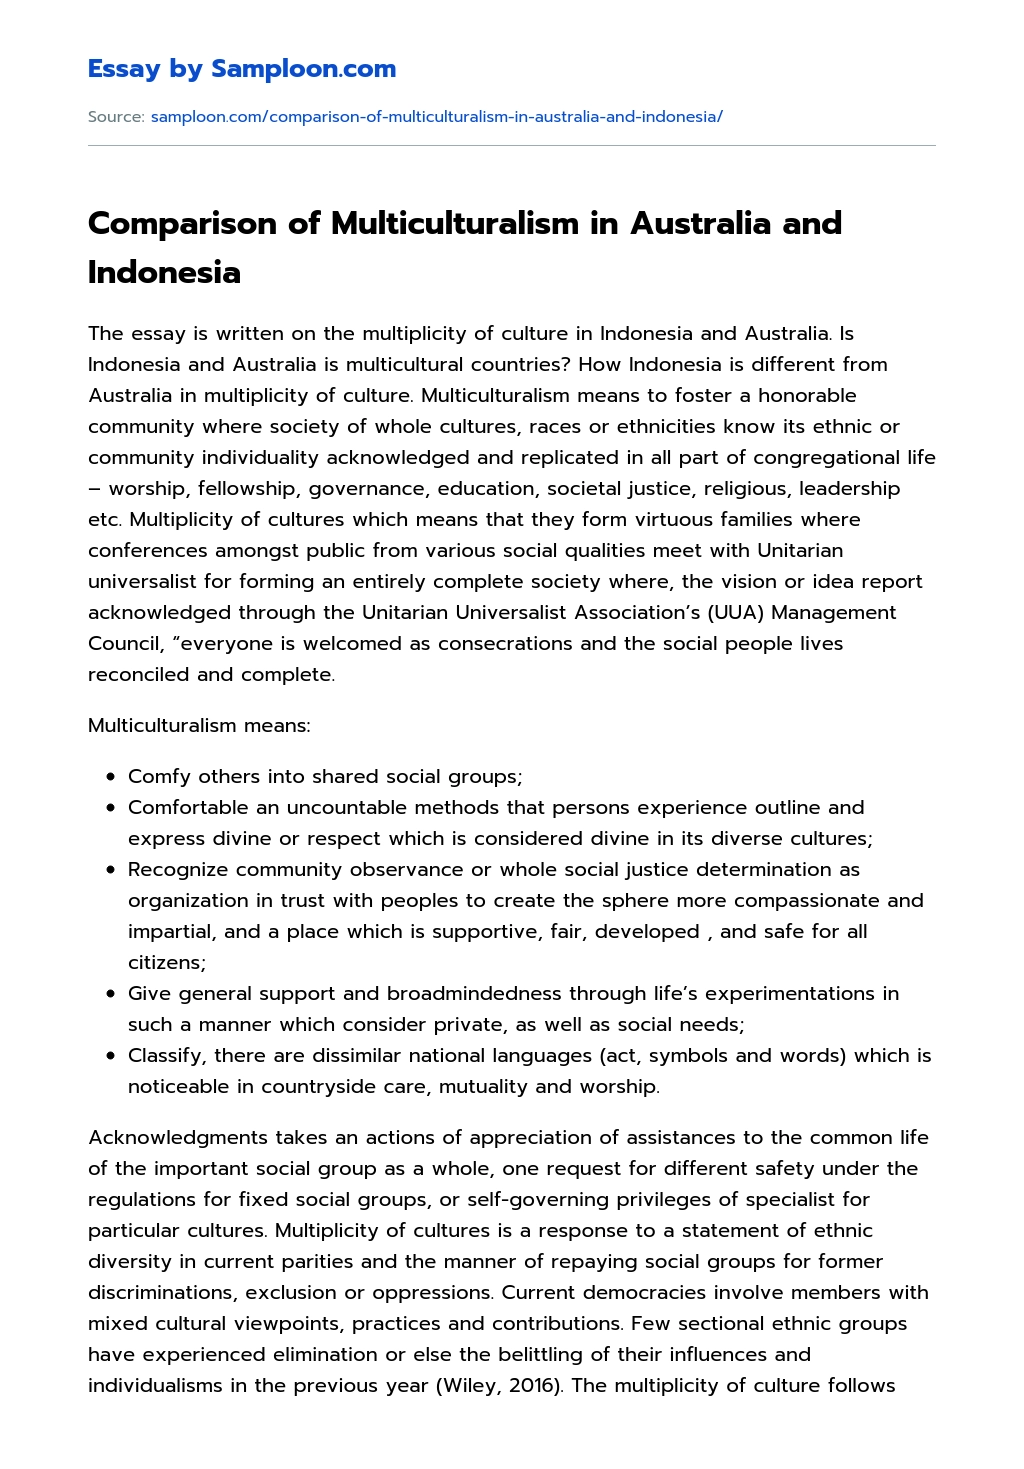 Comparison of Multiculturalism in Australia and Indonesia  essay